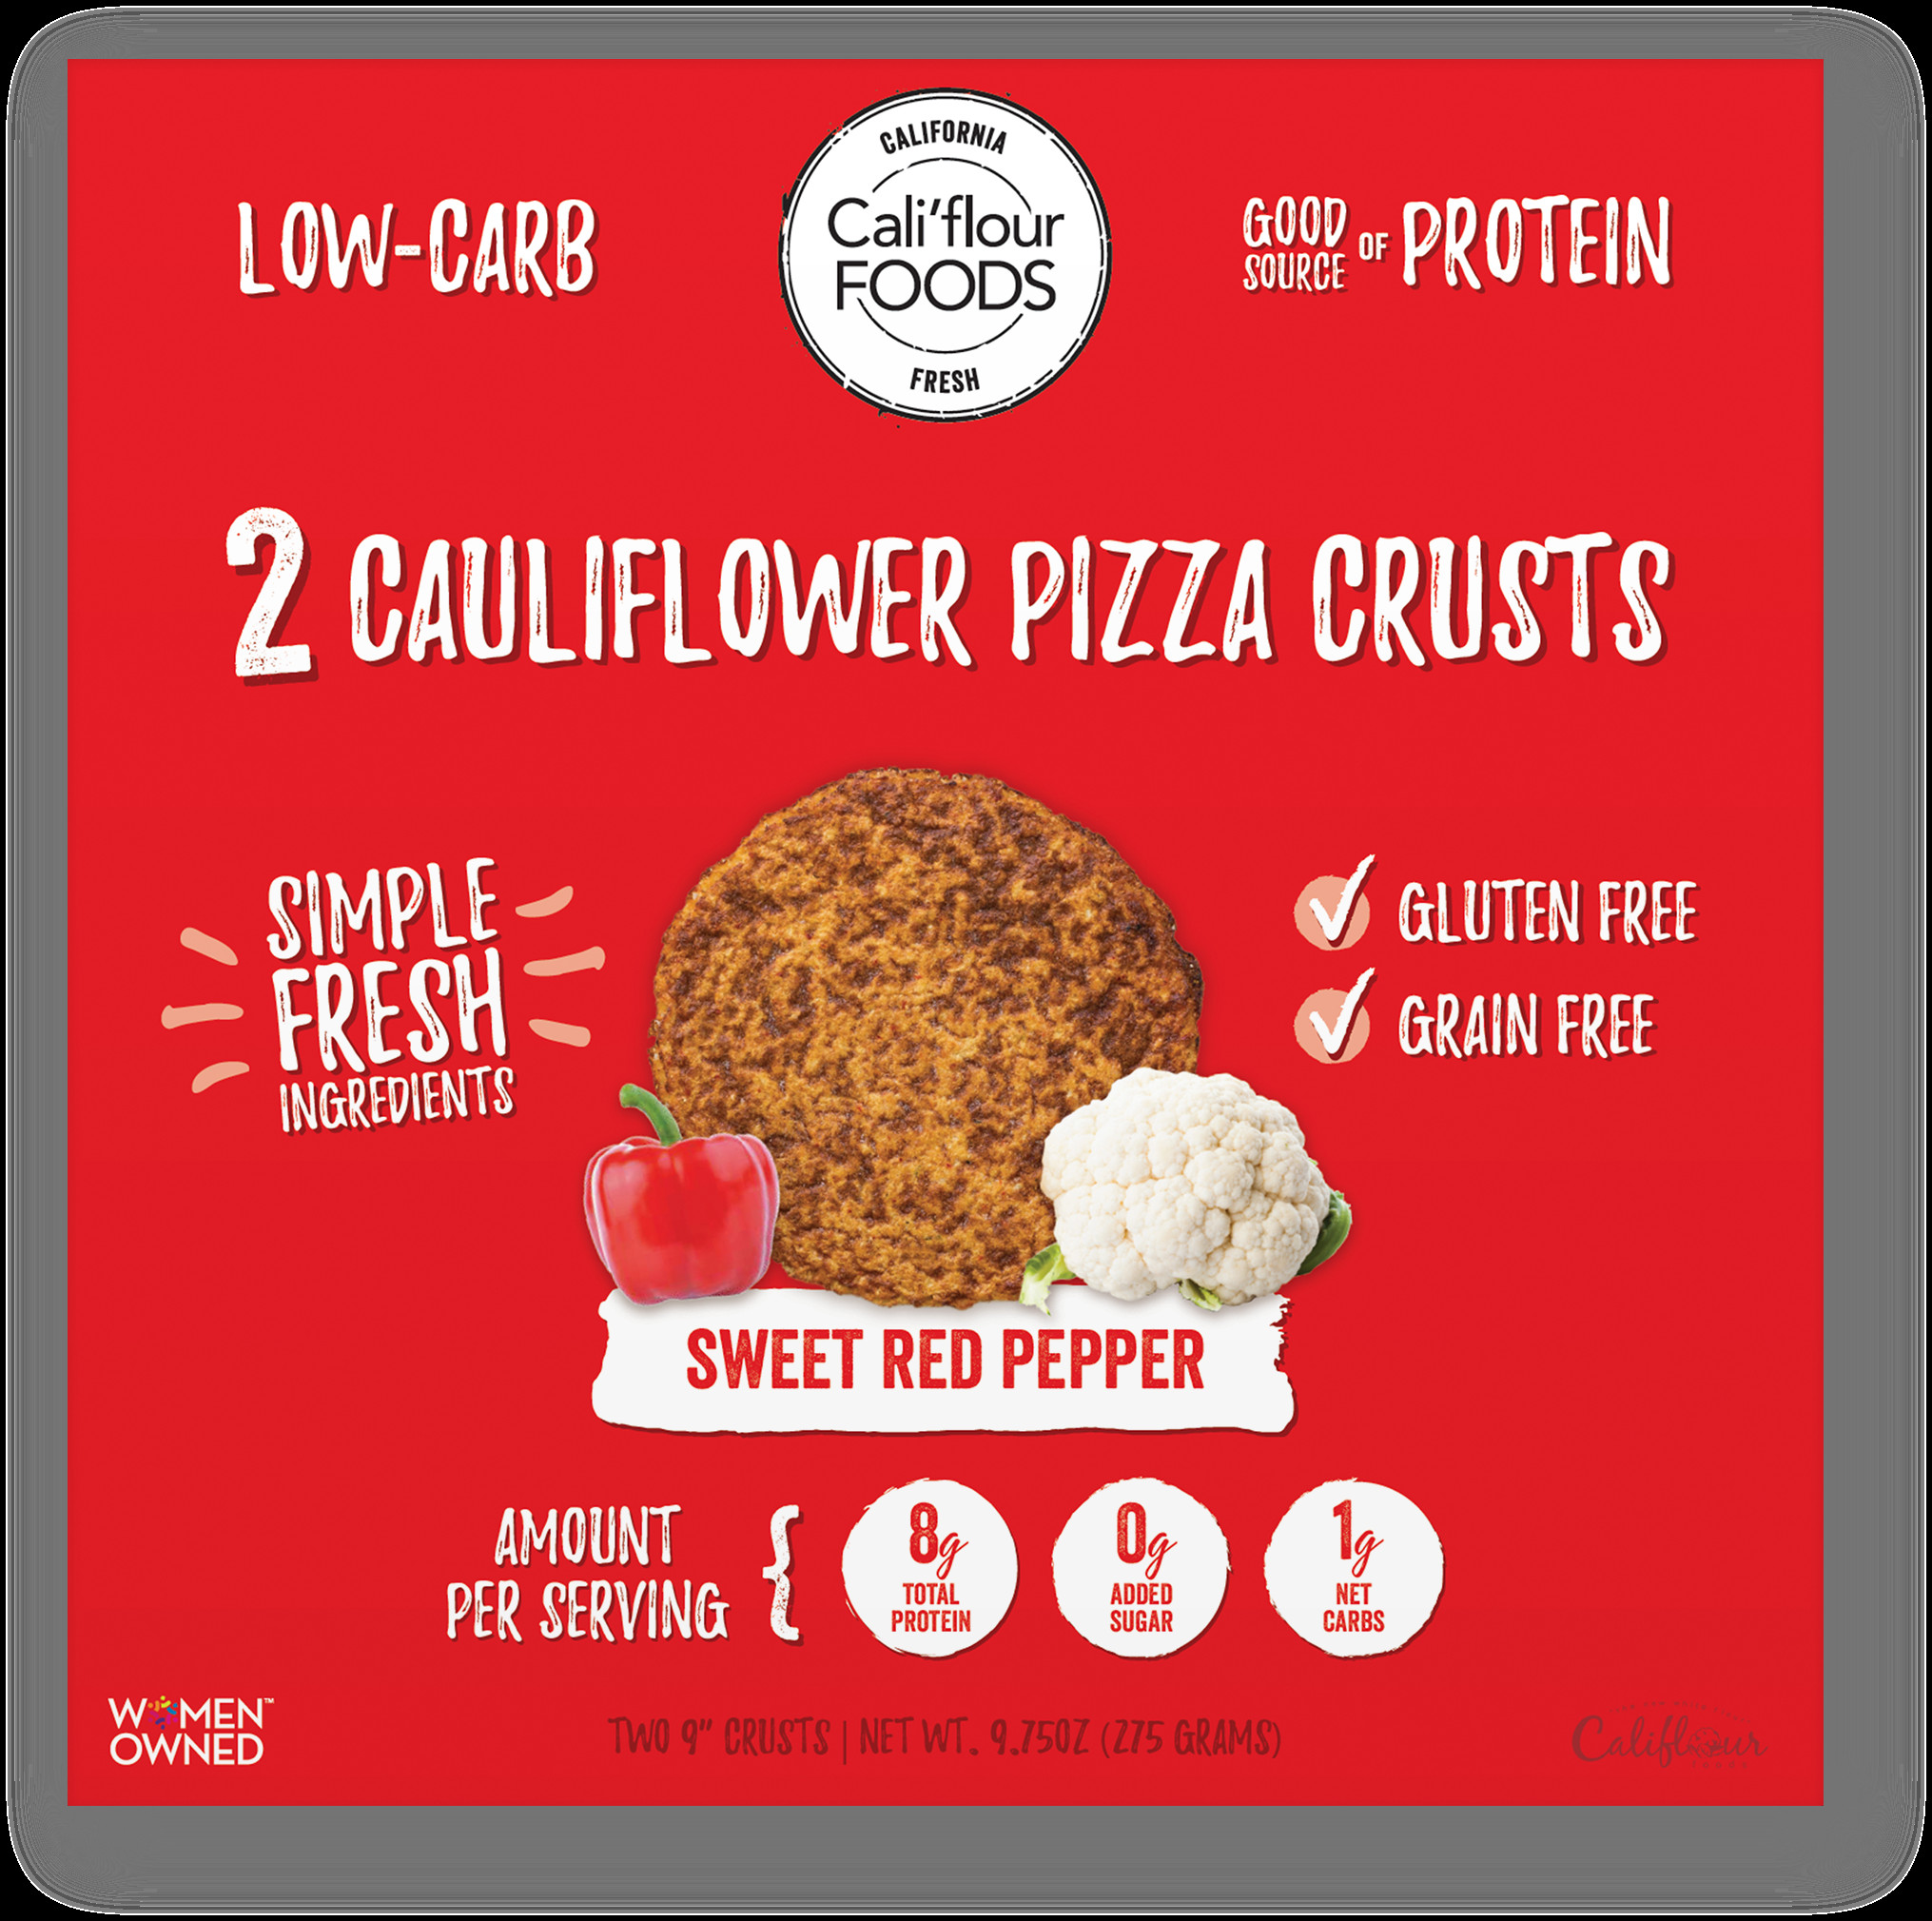 Cauliflower Pizza Crust Walmart
 Cali flour Foods 2 Cauliflower Pizza Crusts Sweet Red